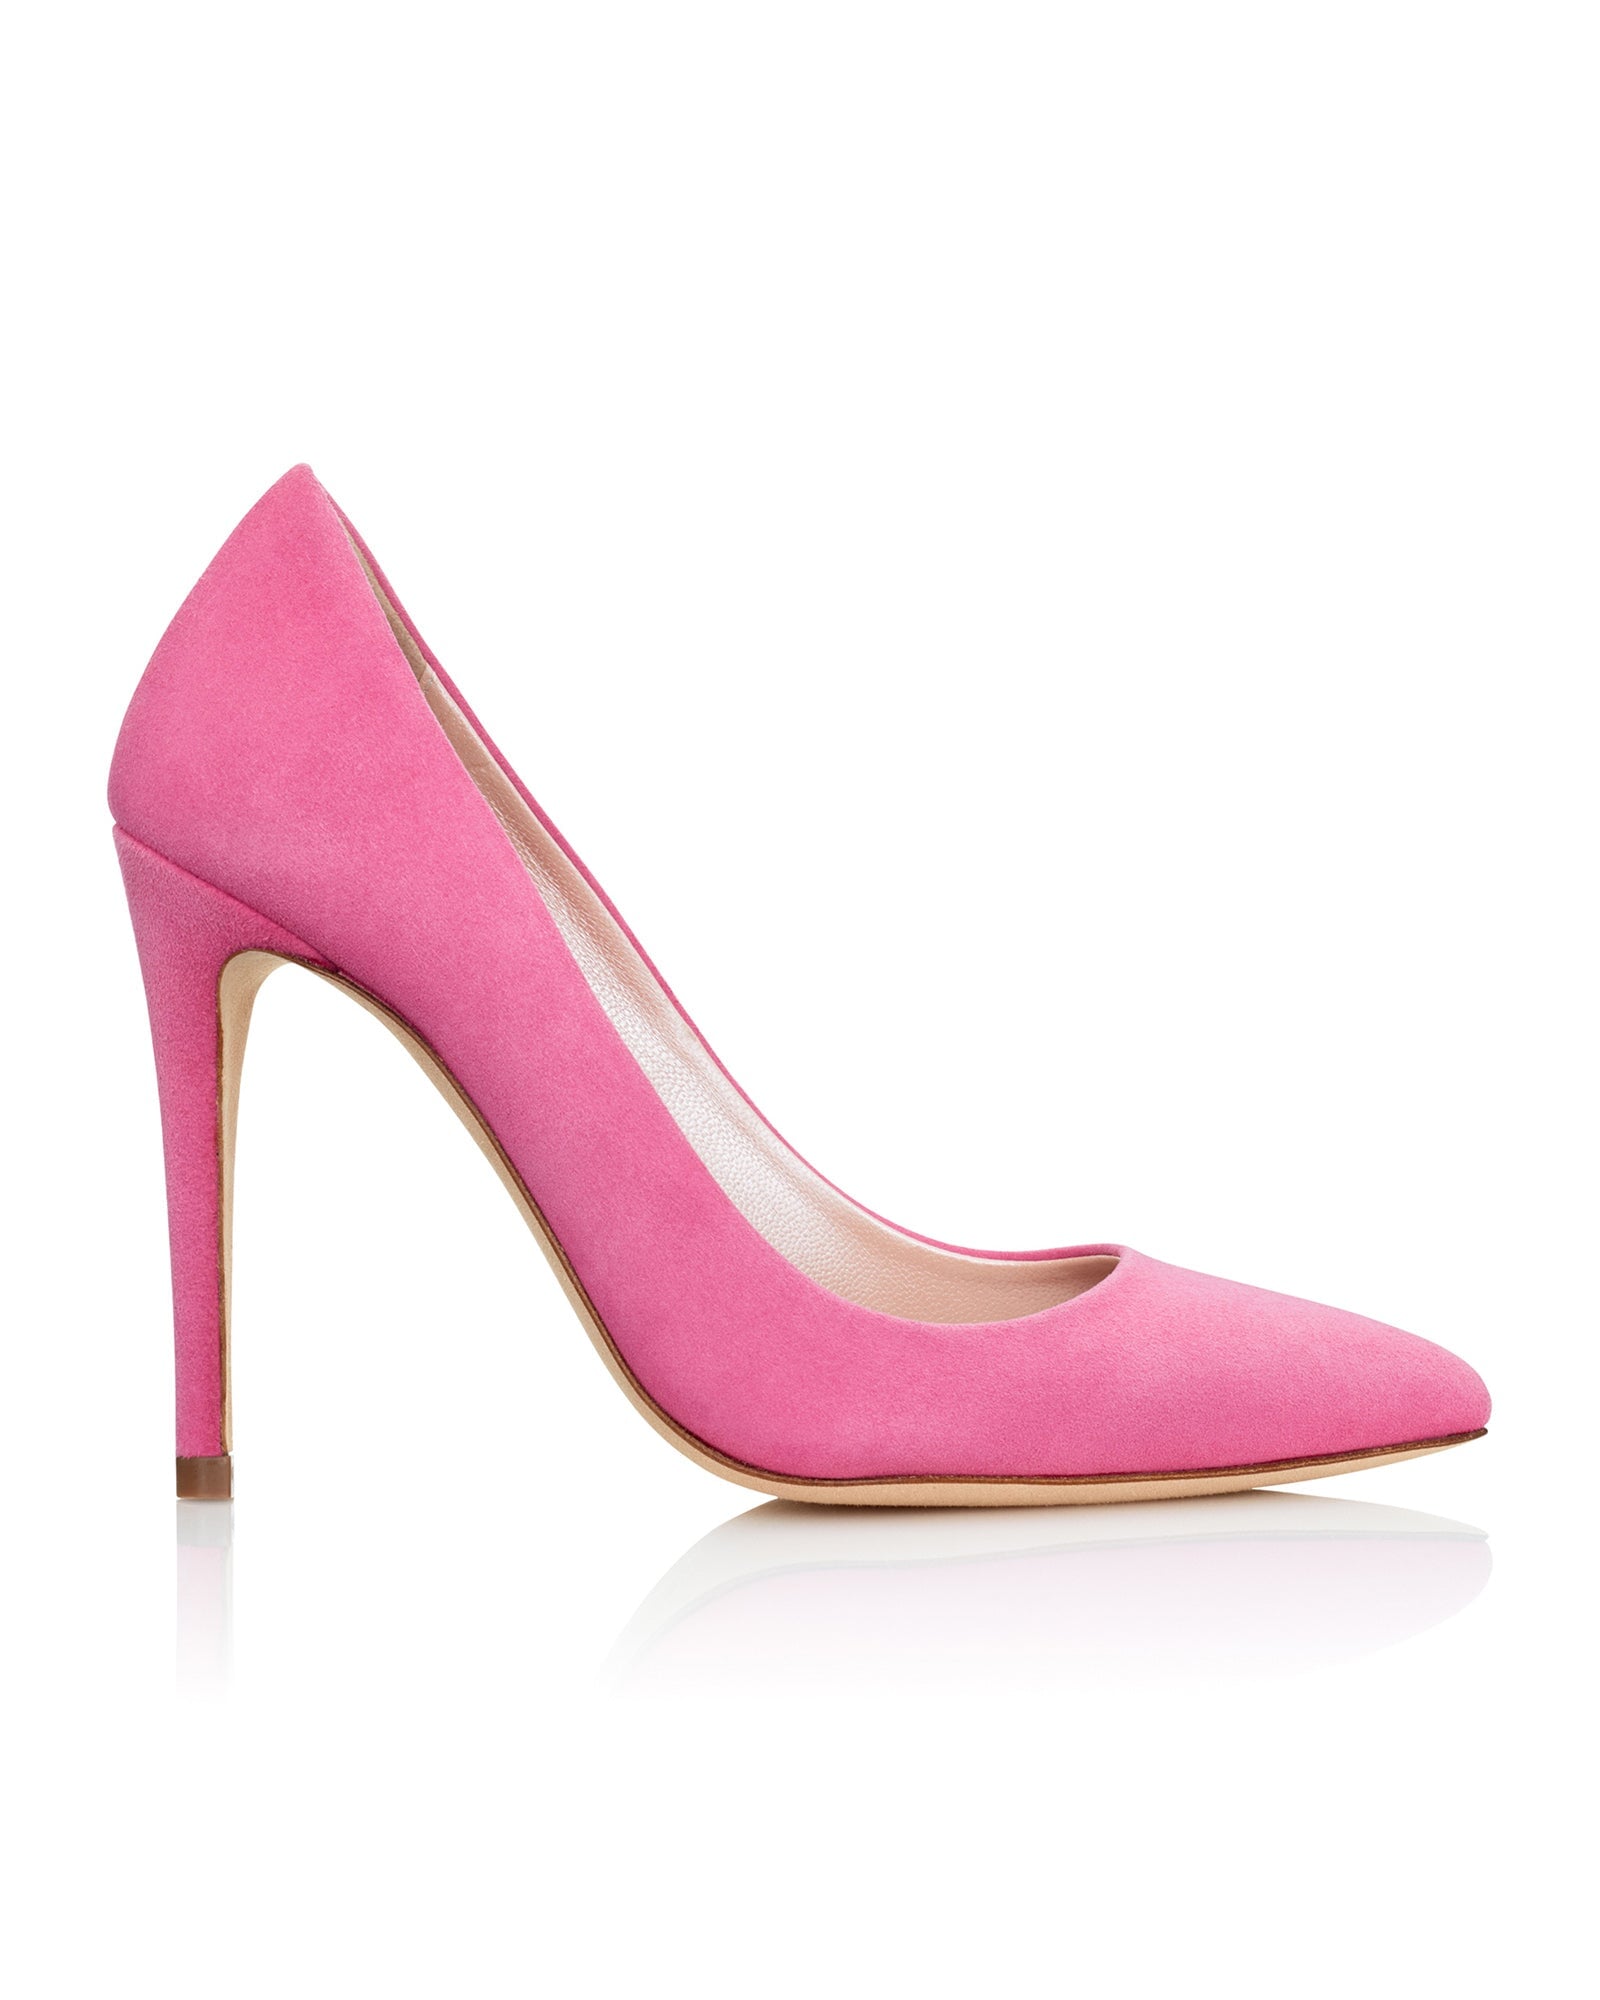 Rebecca Cupcake Fashion Shoe Bright Pink Pointed High Heel Court Shoe  image